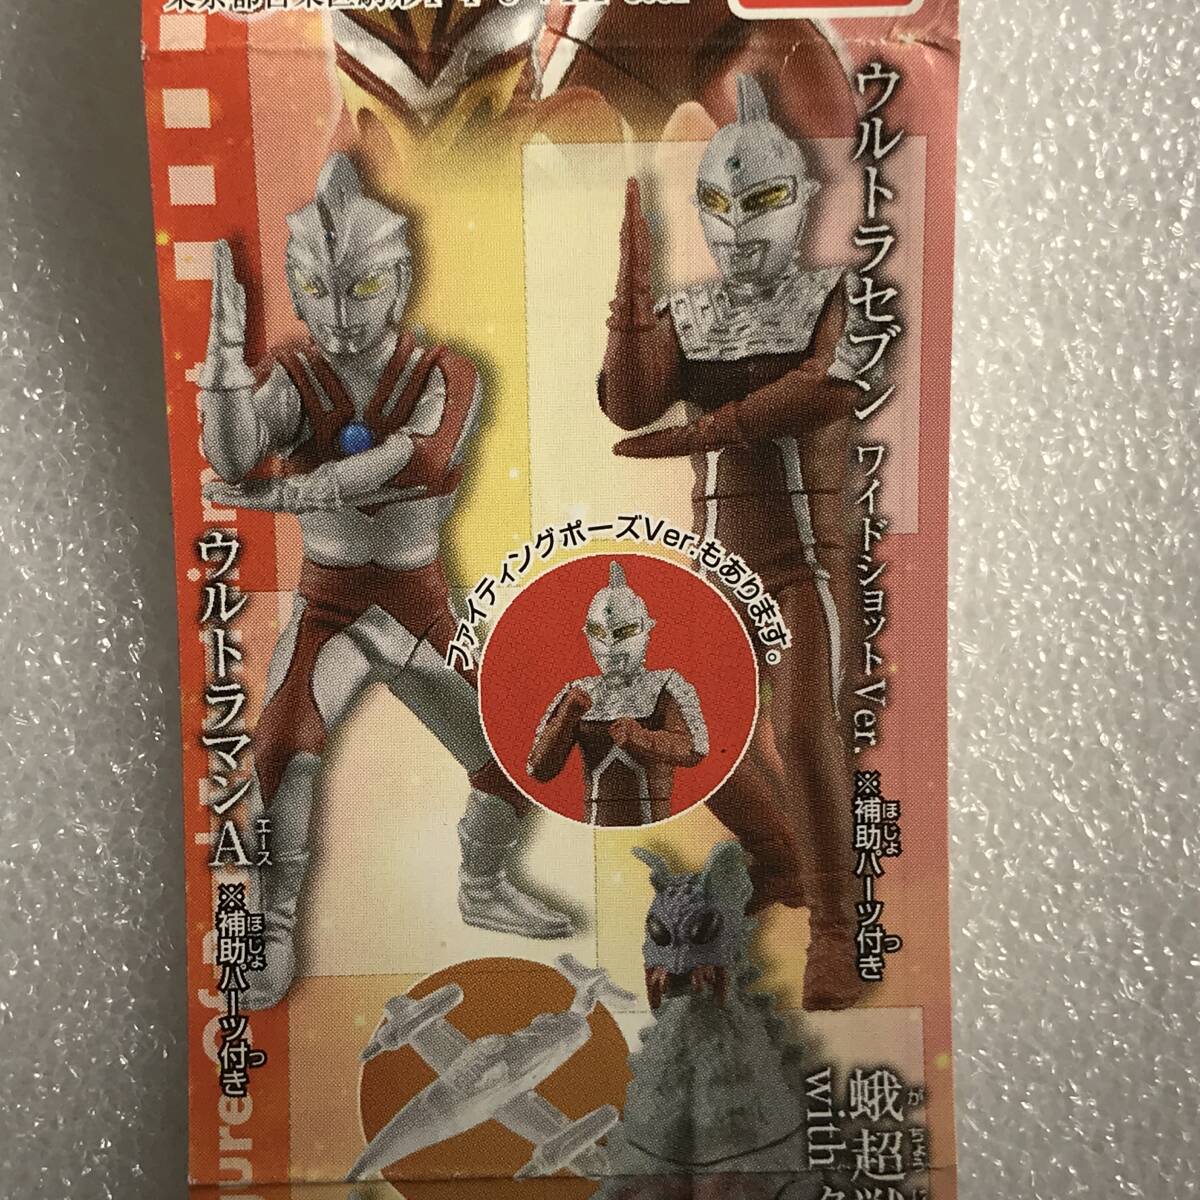  gashapon HG серии [H.G.C.O.R.E Ultraman 04 seven since 1967 сборник ]..5 вид суммировать * seven (2 вид ) Ace Gaya V2 Mebius 